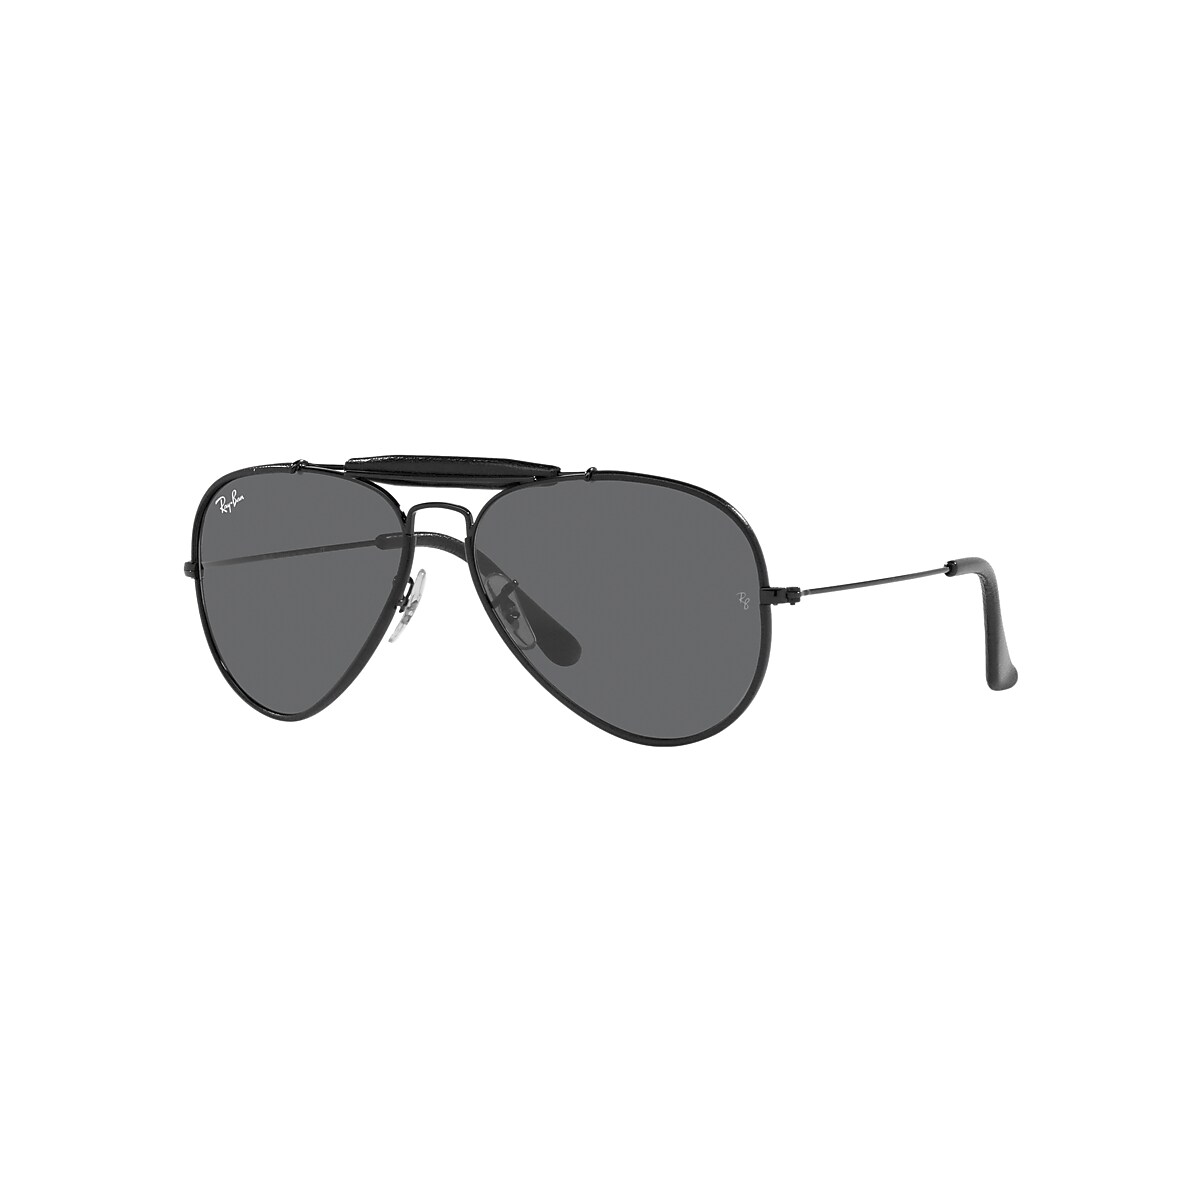 militia Broom Artistic Aviator Limited Edition Sunglasses in Black and Dark Grey | Ray-Ban®